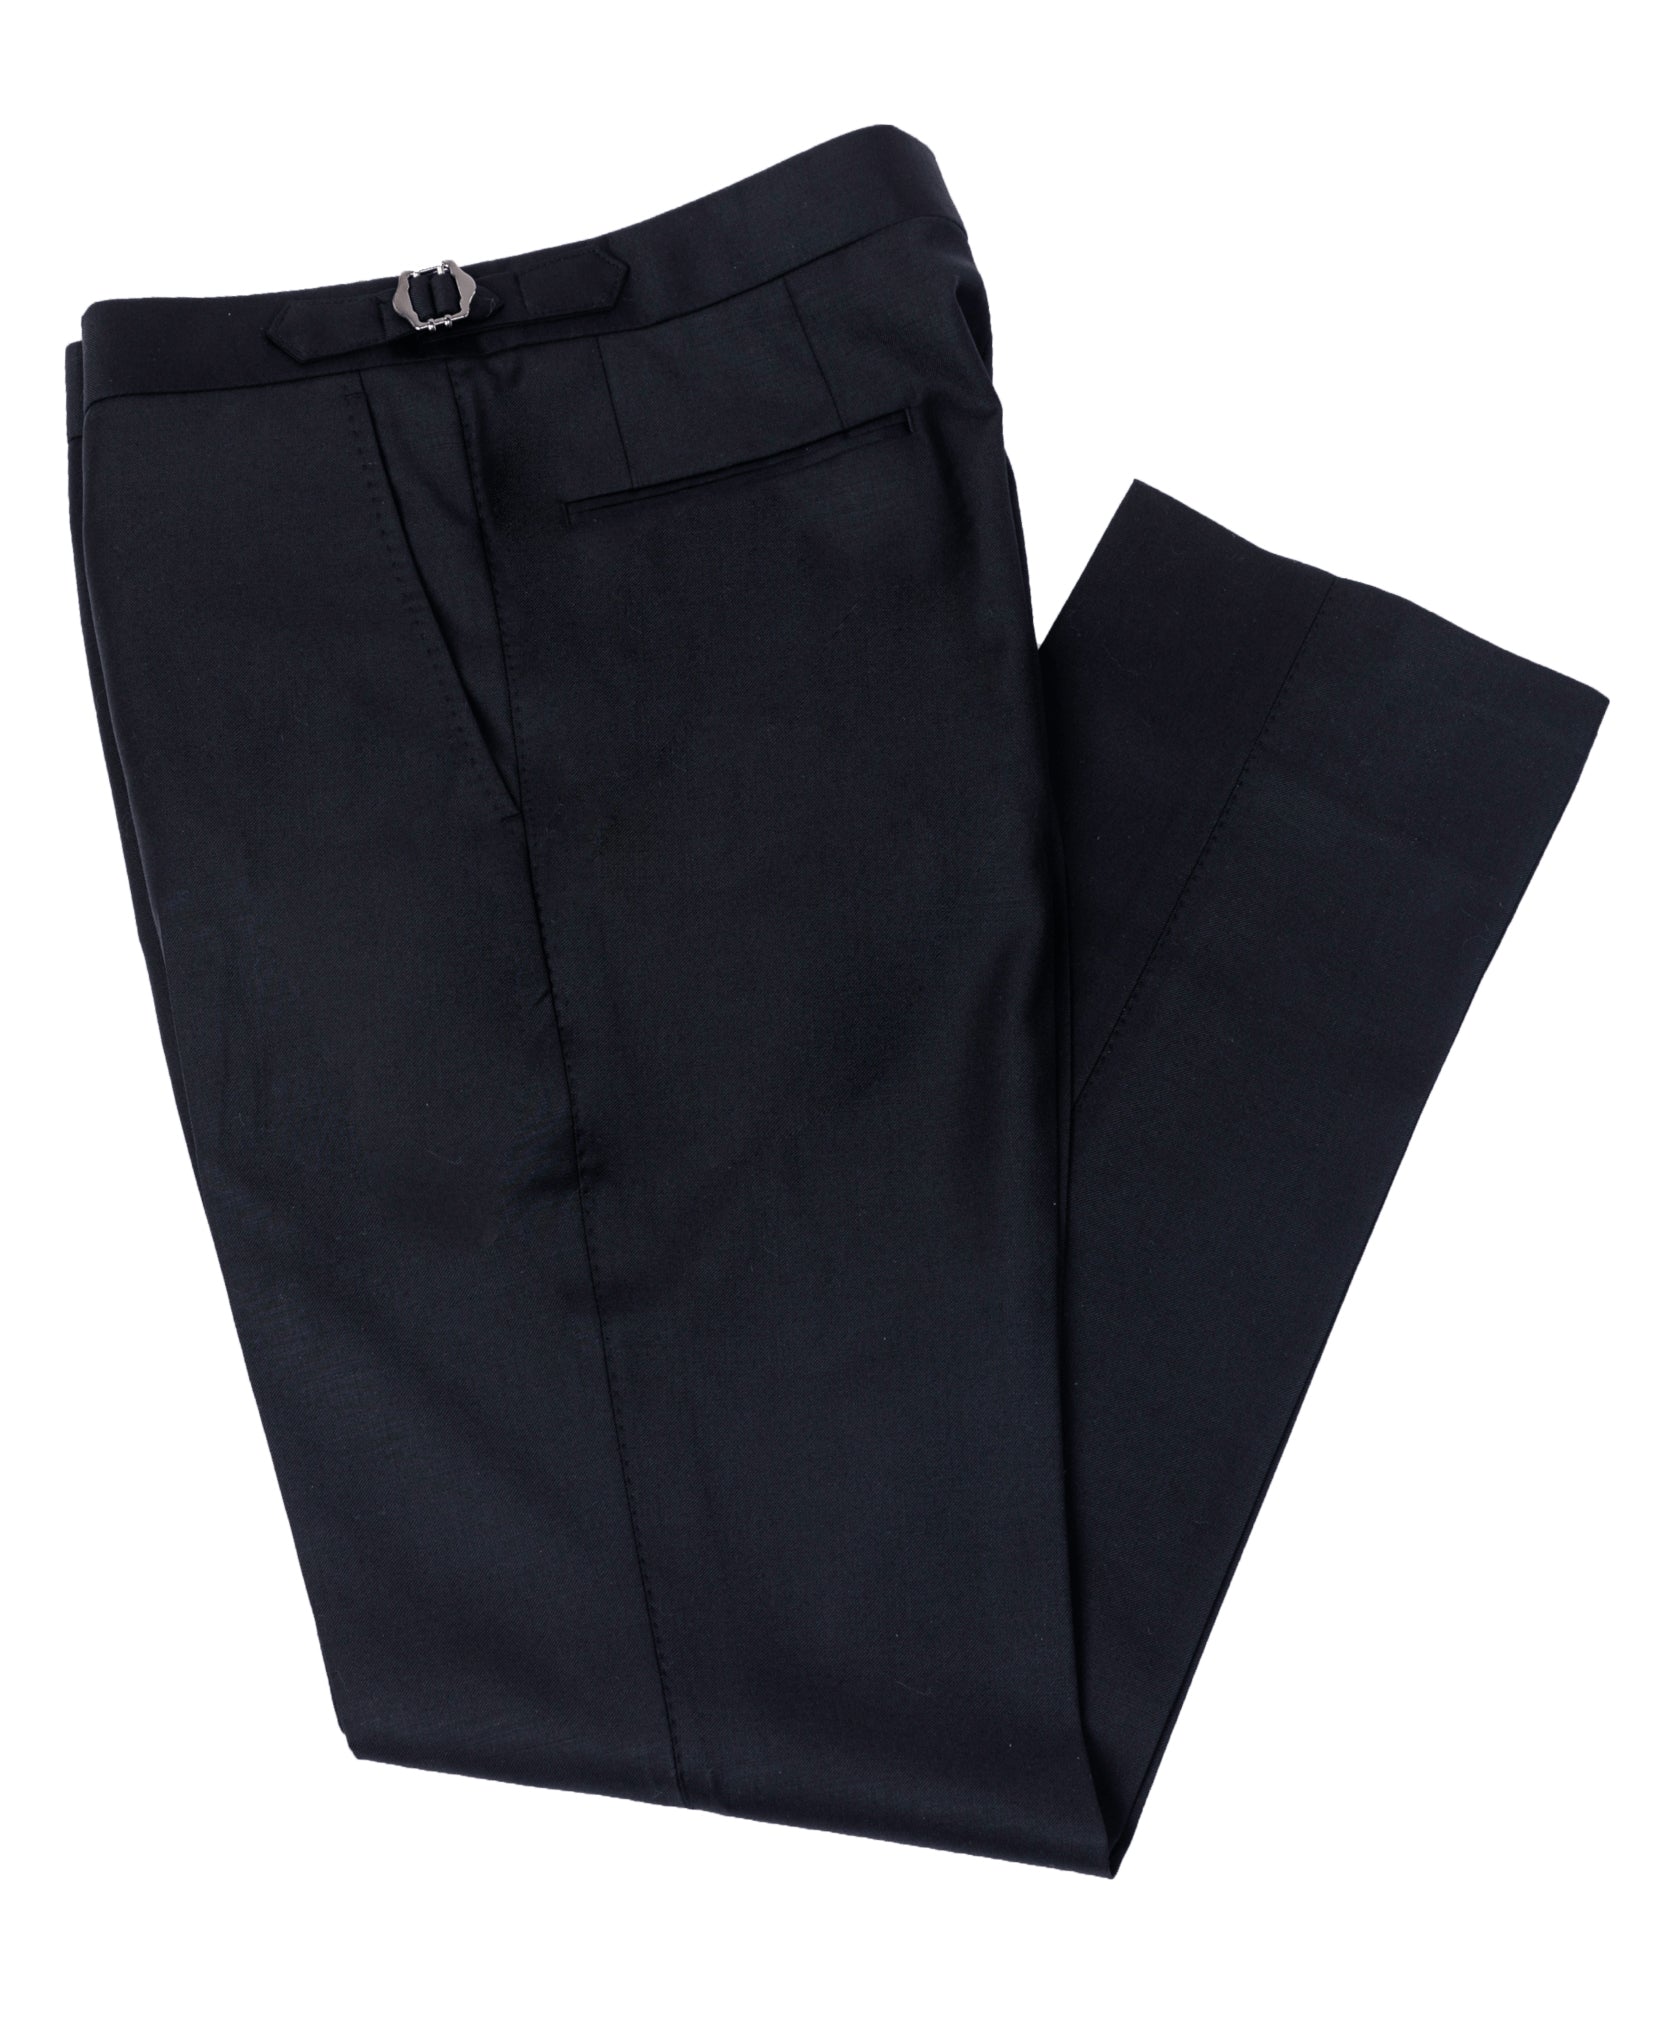 Black Pants with Side Adjustment